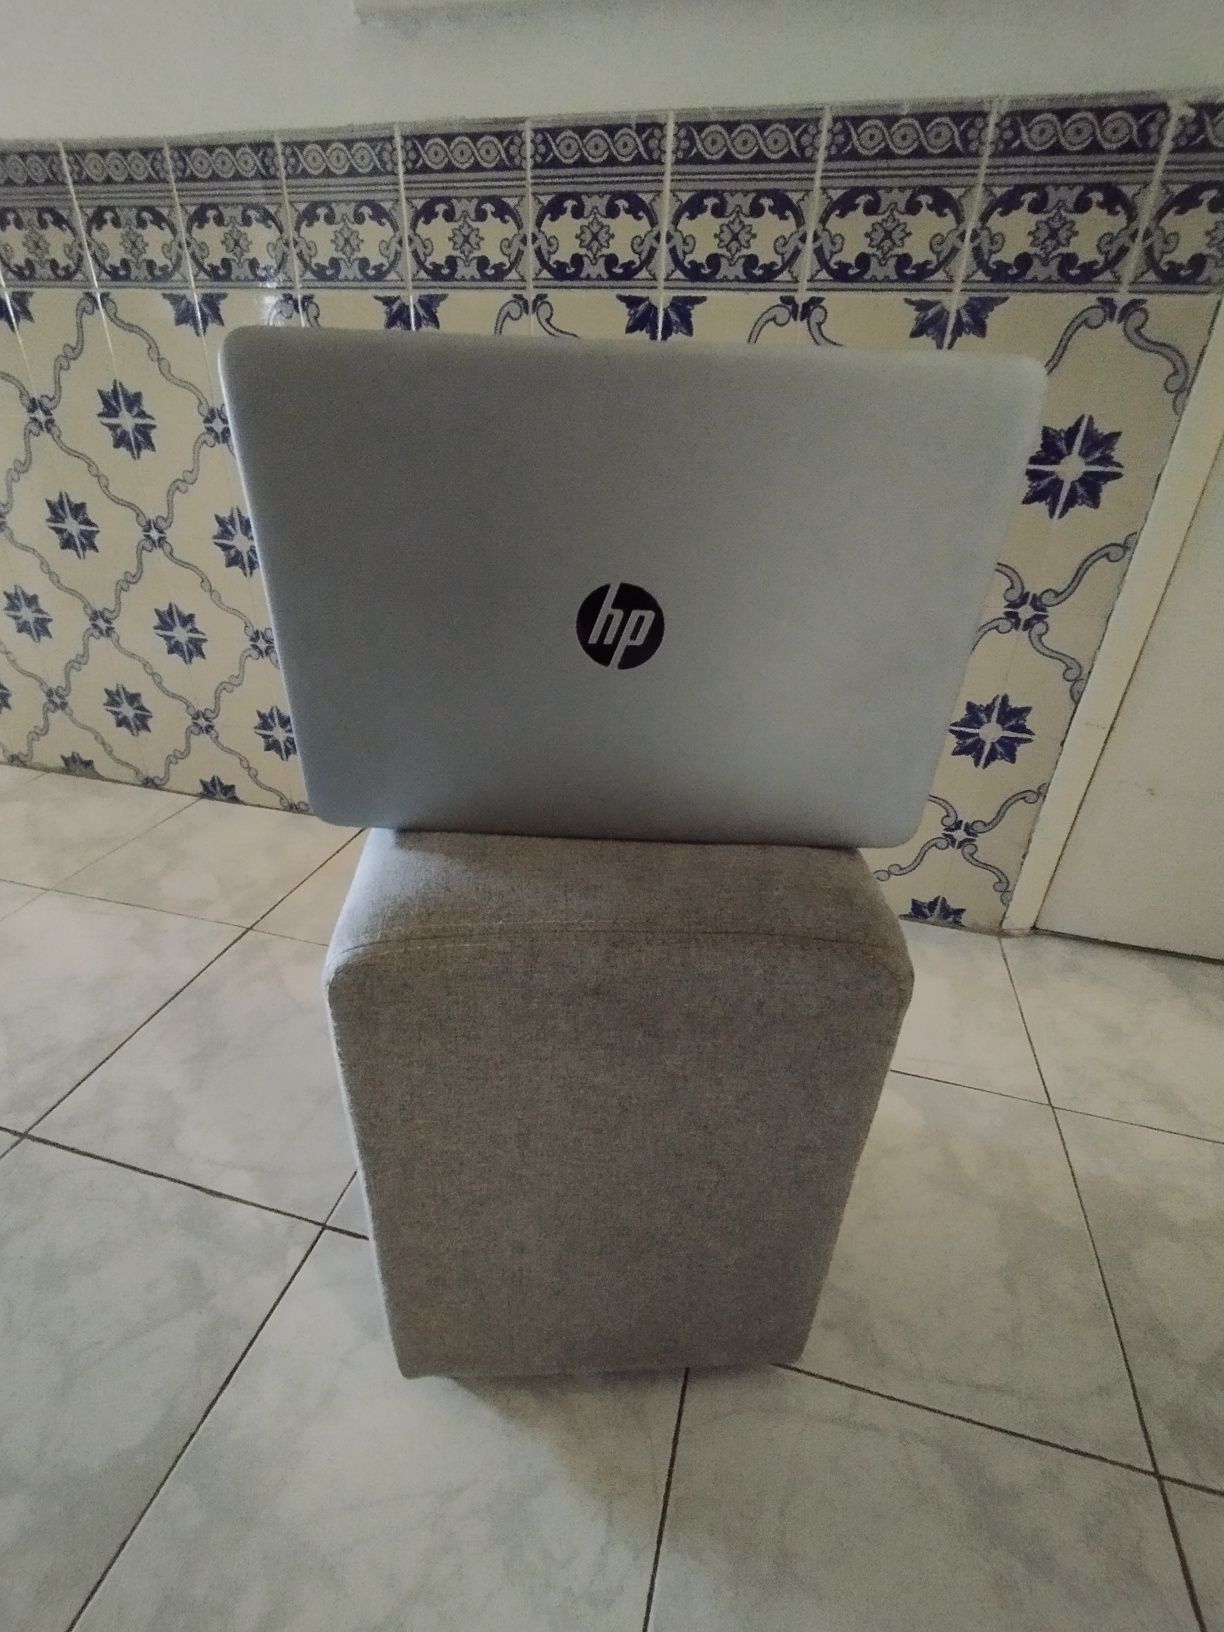 Nootbook HP - Intel core